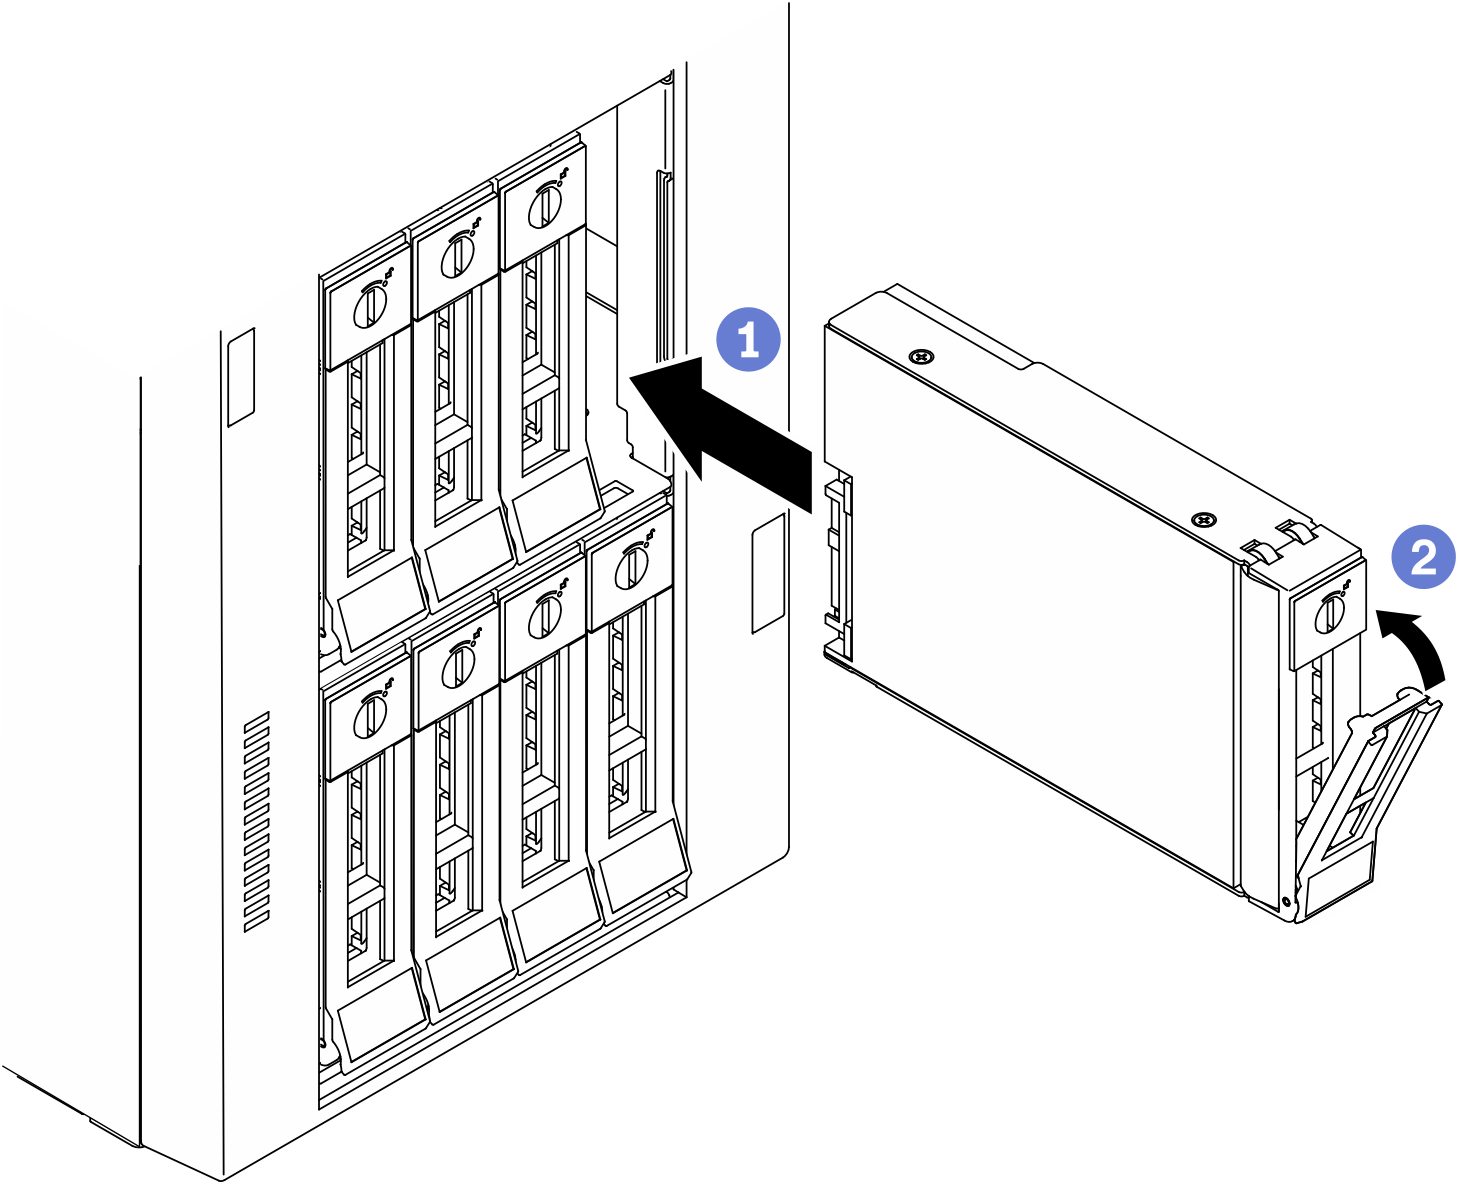 3.5-inch simple-swap drive installation